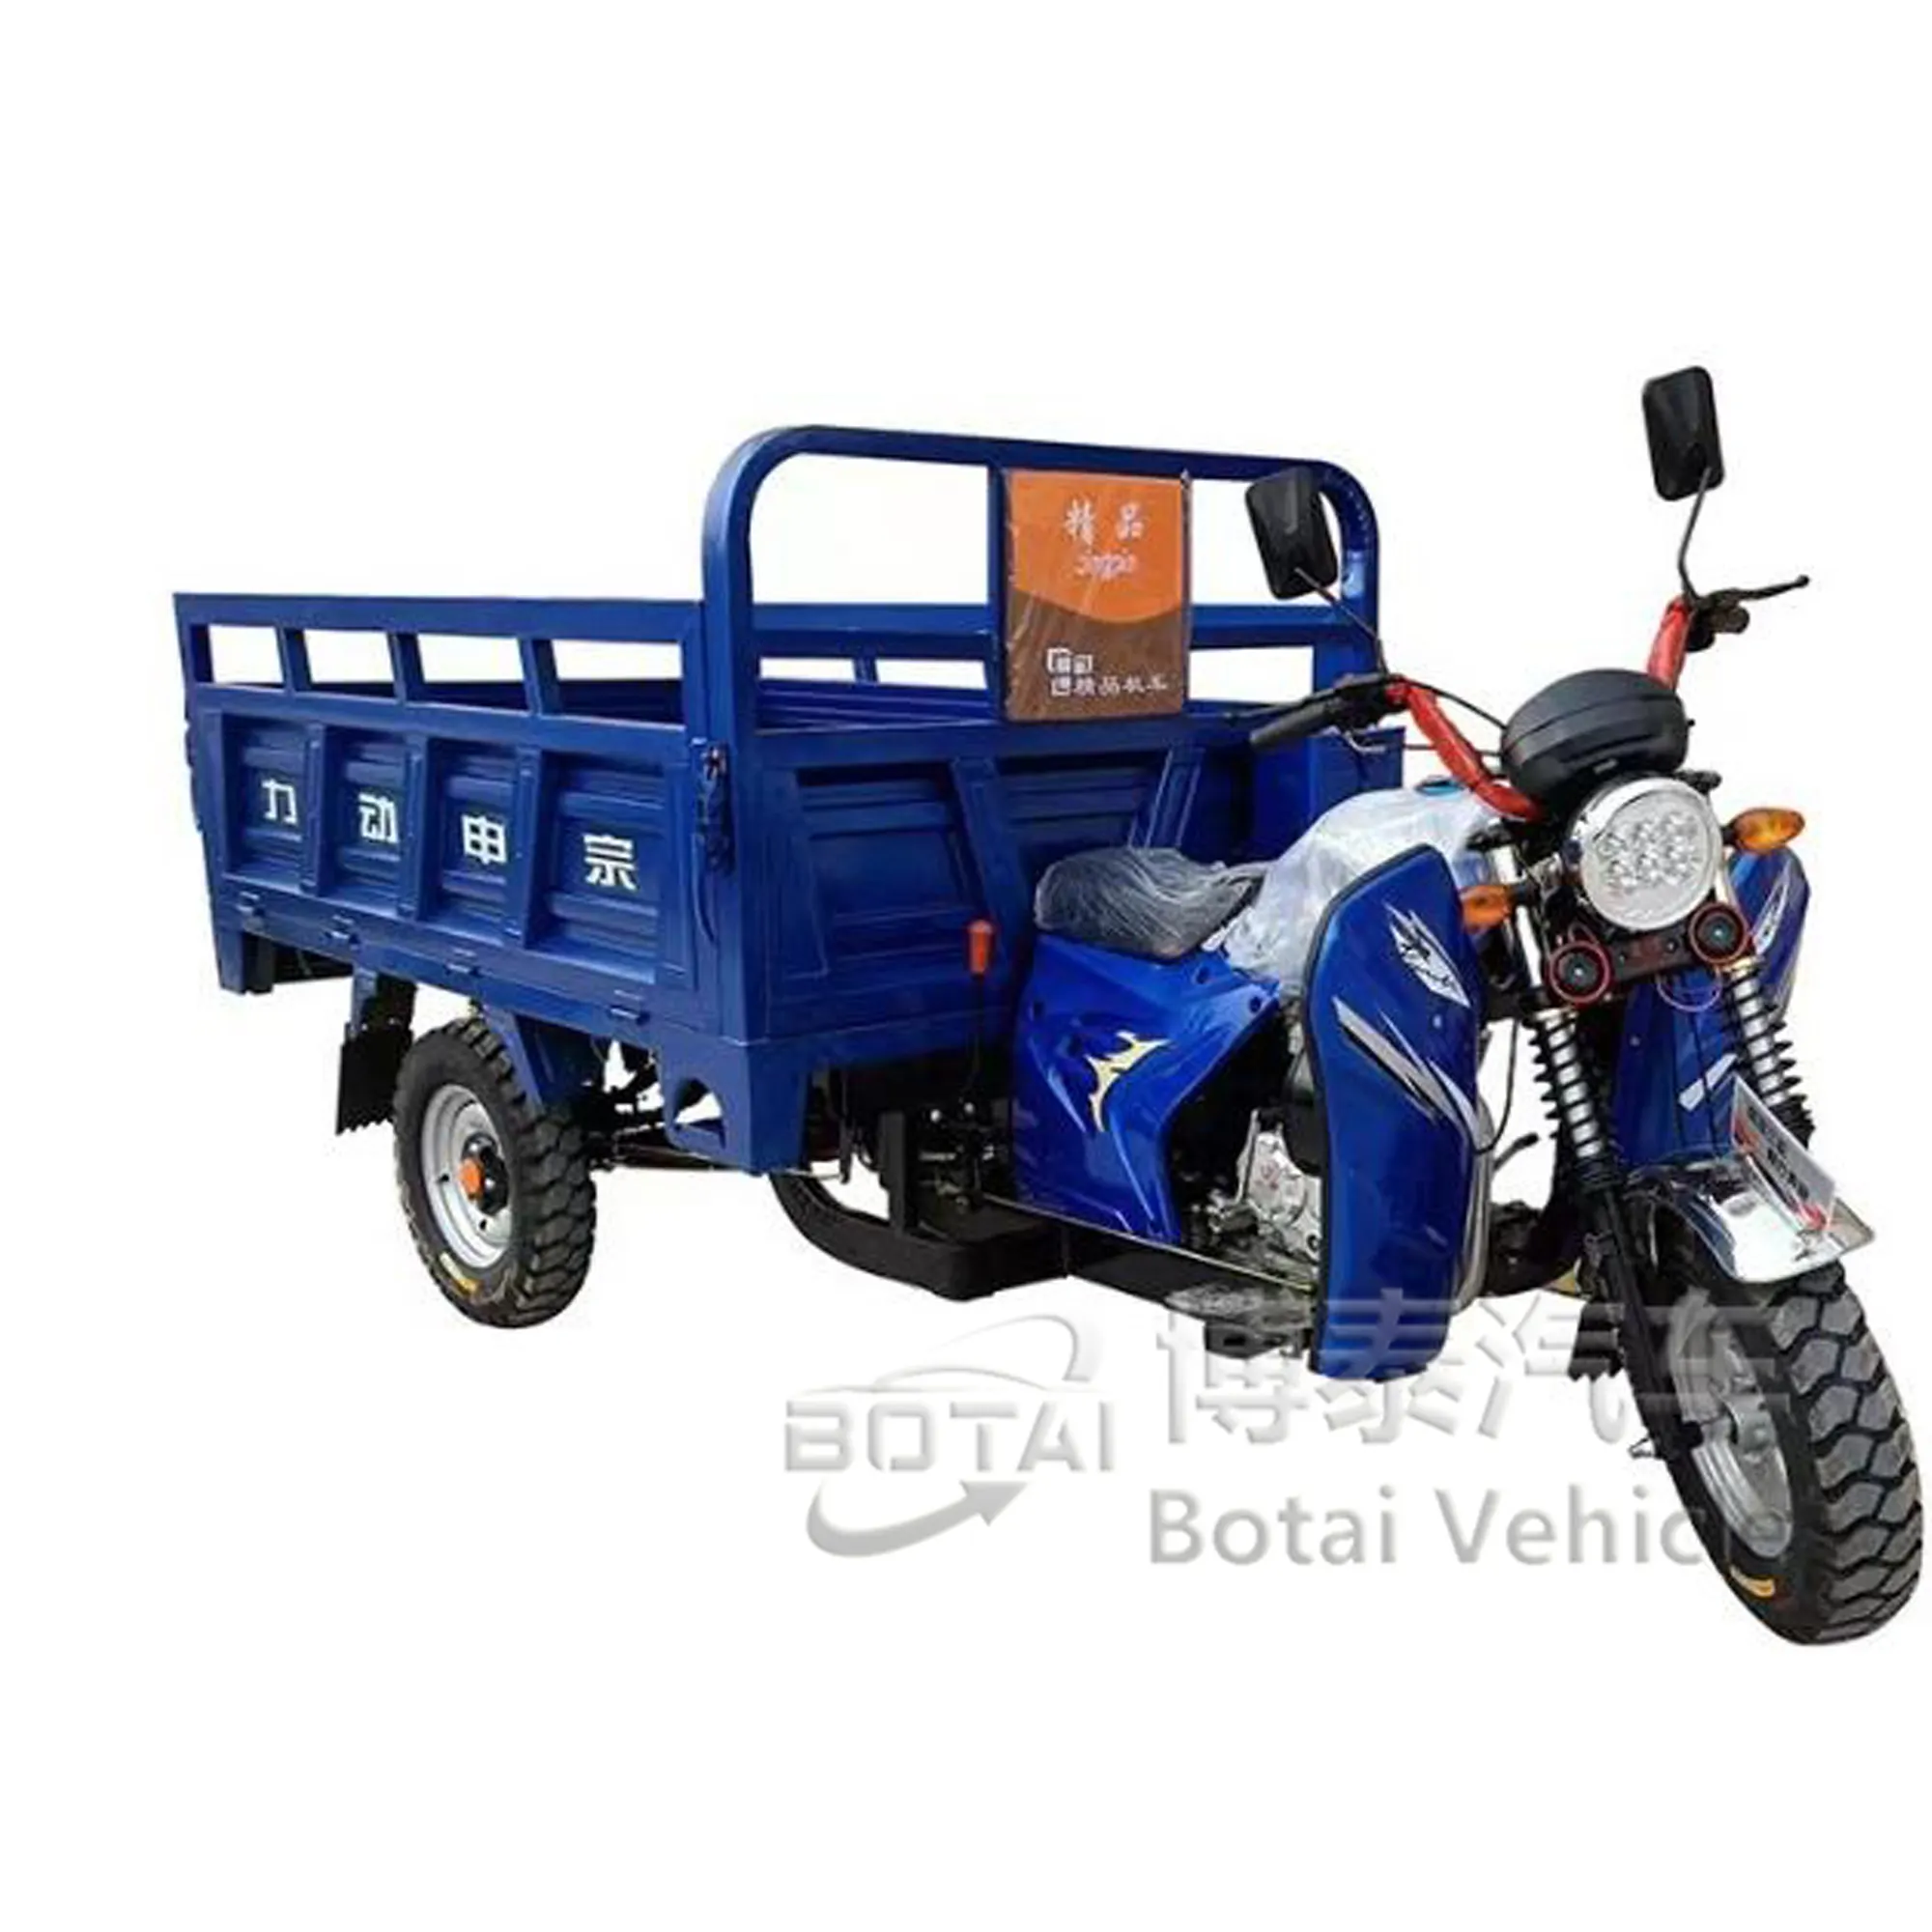 Motocicleta eléctrica de alta potencia Cargo 3 Triciclo de ruedas para la motocicleta de transporte de productos agrícolas